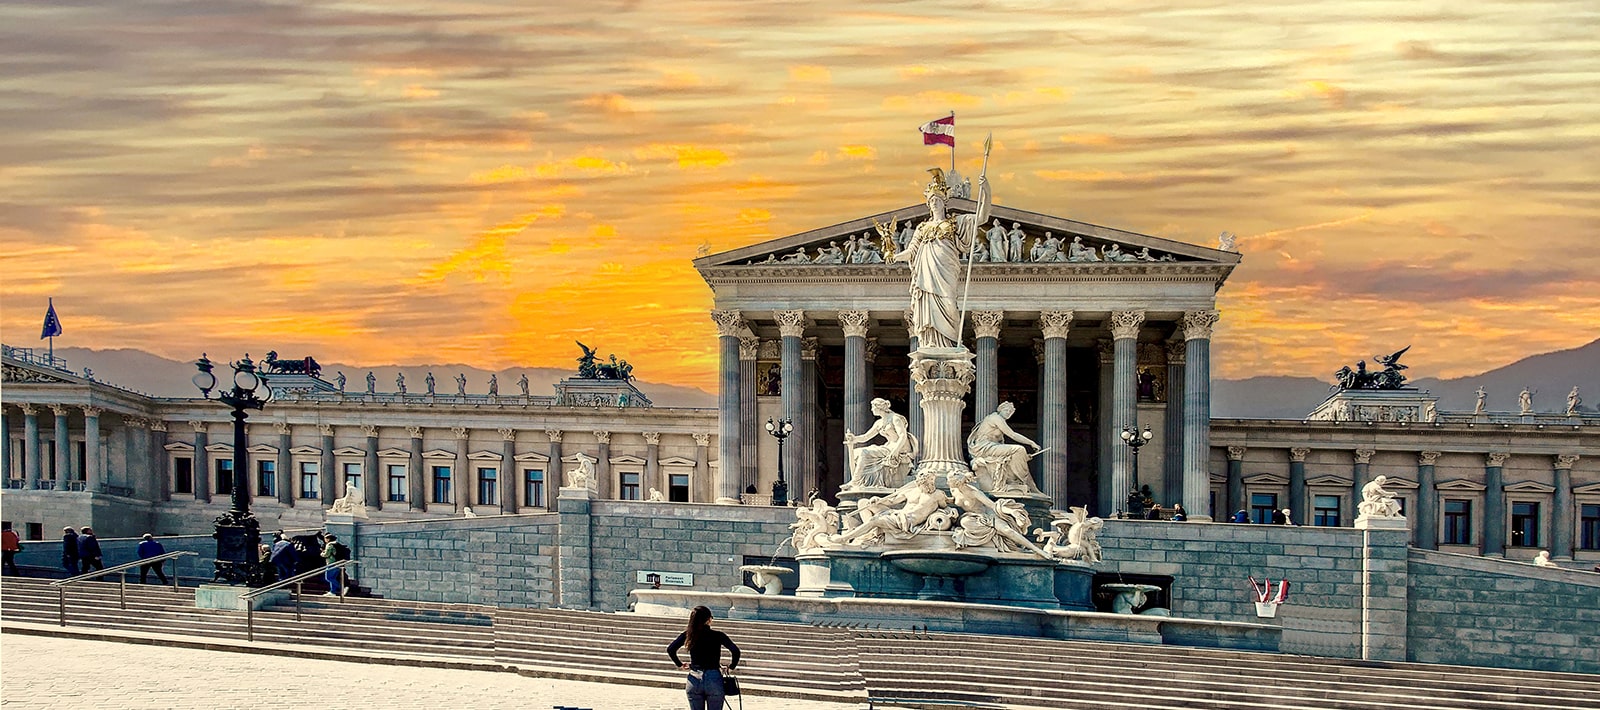 Parlament Wien - Front mit Athenebrunnen - www.wien-erleben.com